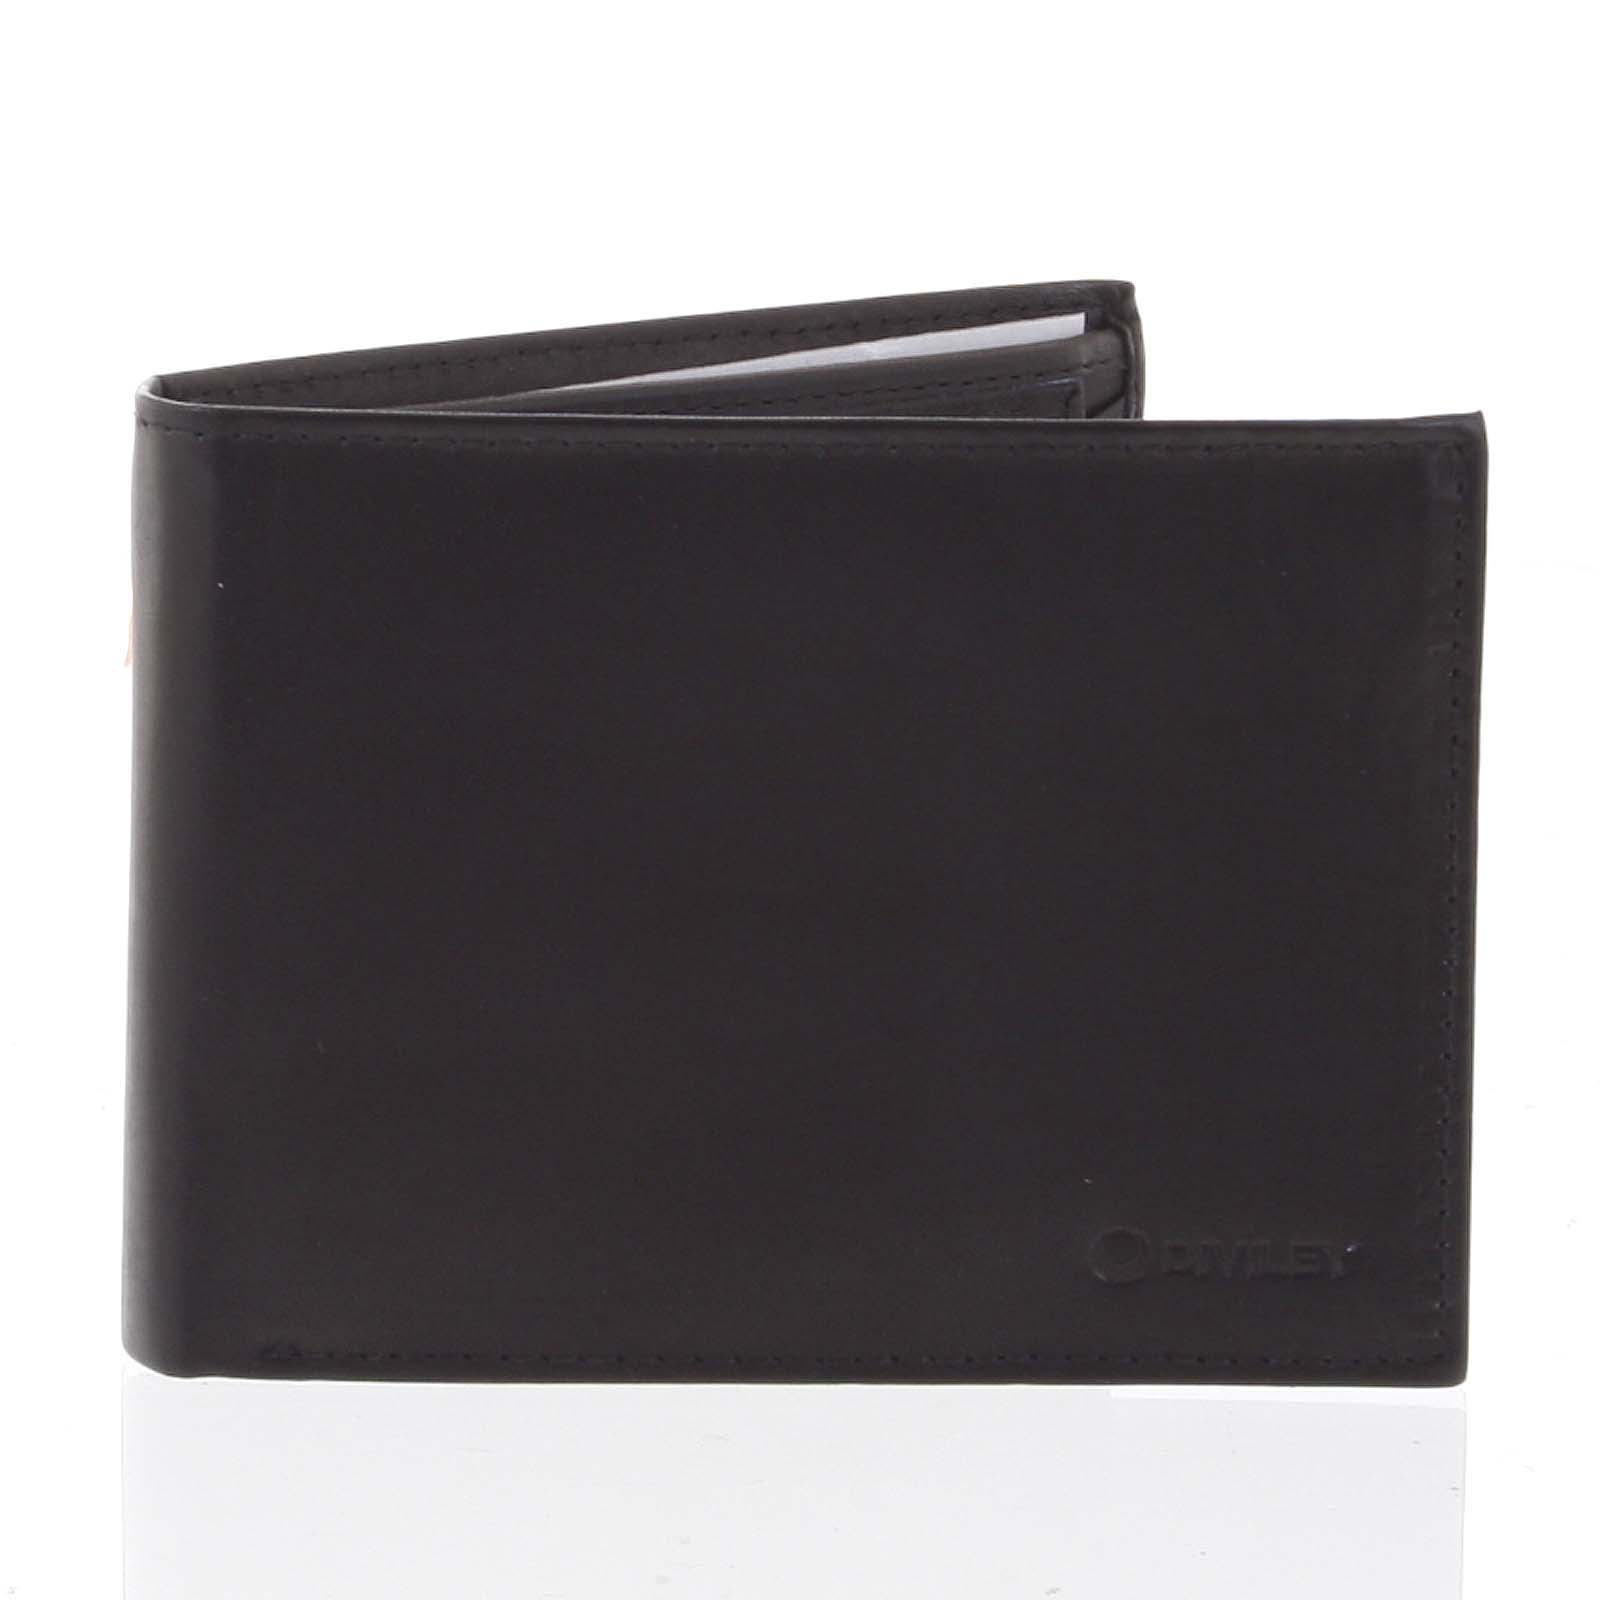 Pánská volná černá kožená peněženka - Diviley Cycbet